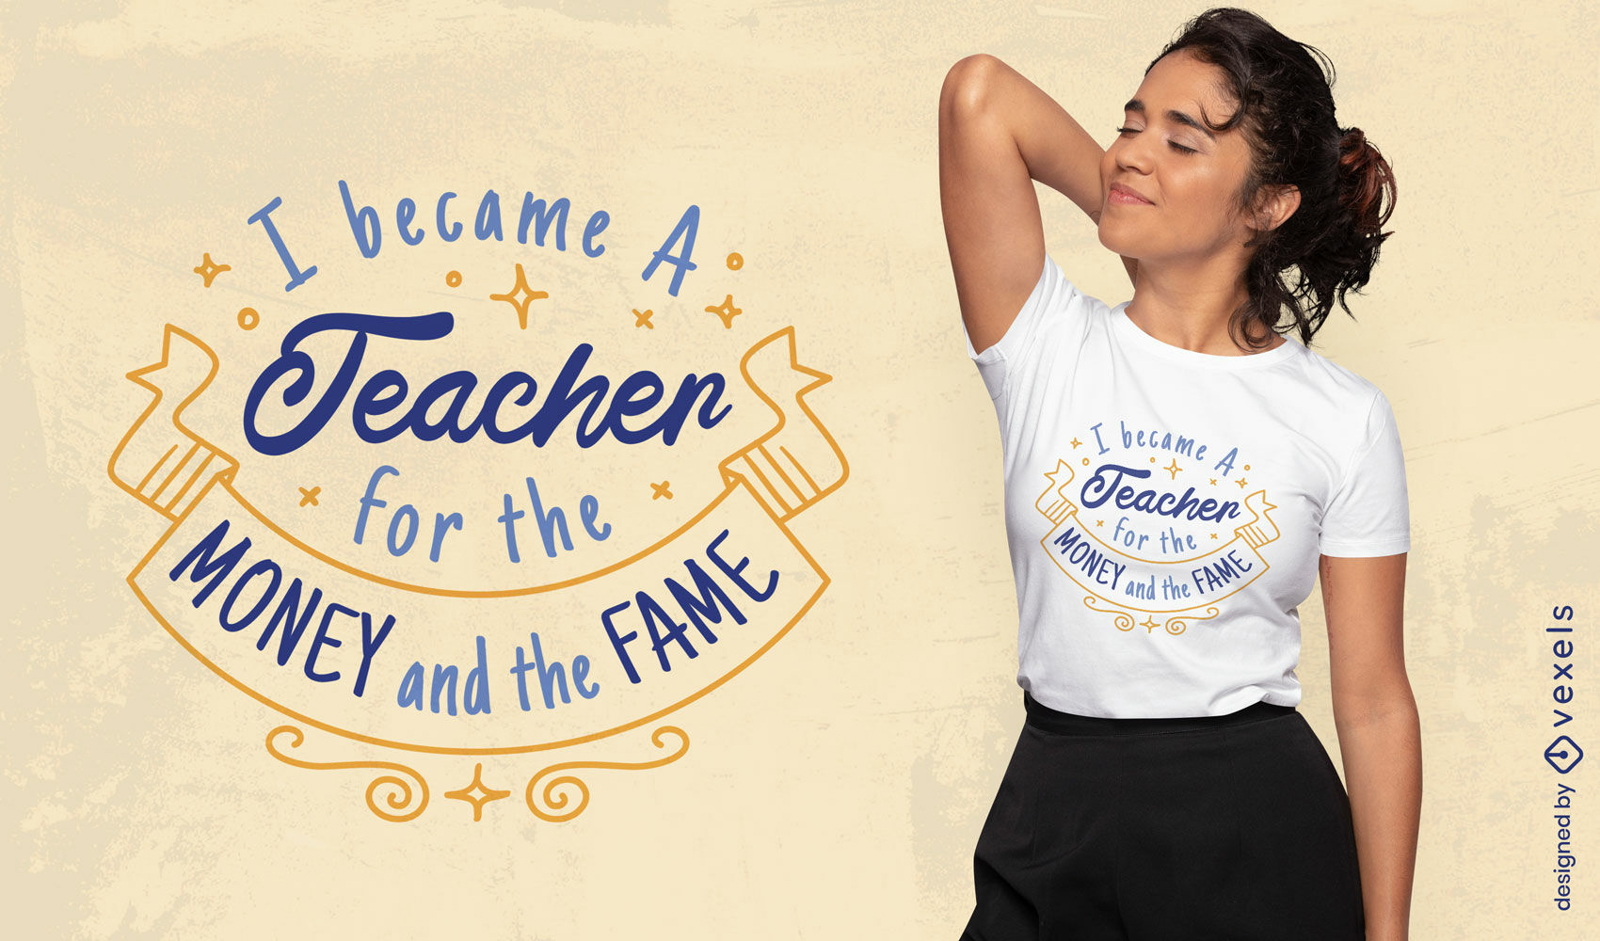 Lustiges Lehrerbildungs-Zitat-T-Shirt Design